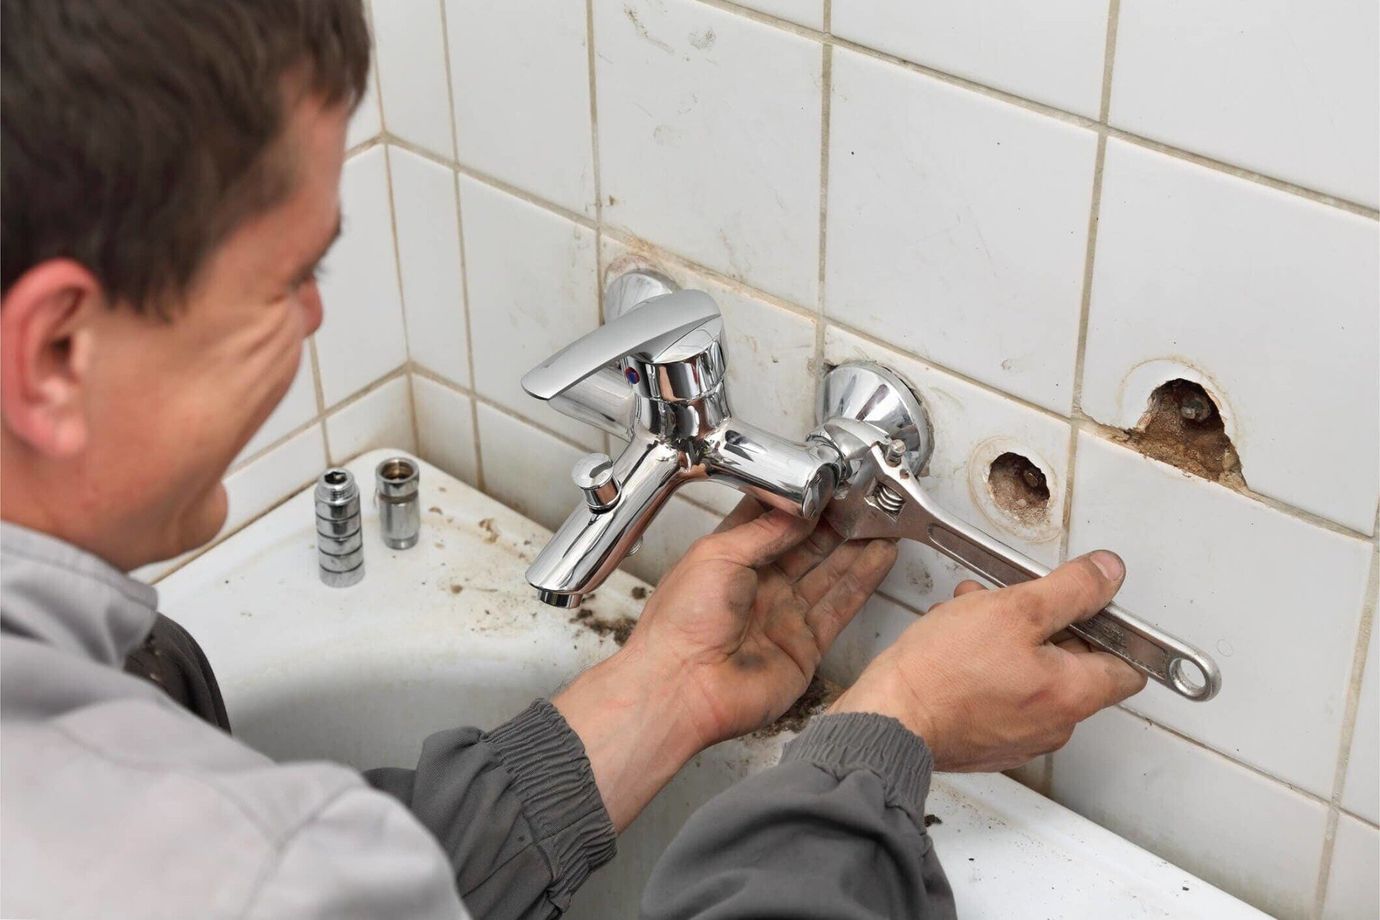 Plumber replacing bathroom sink — Plumbing services in Spanaway, WA